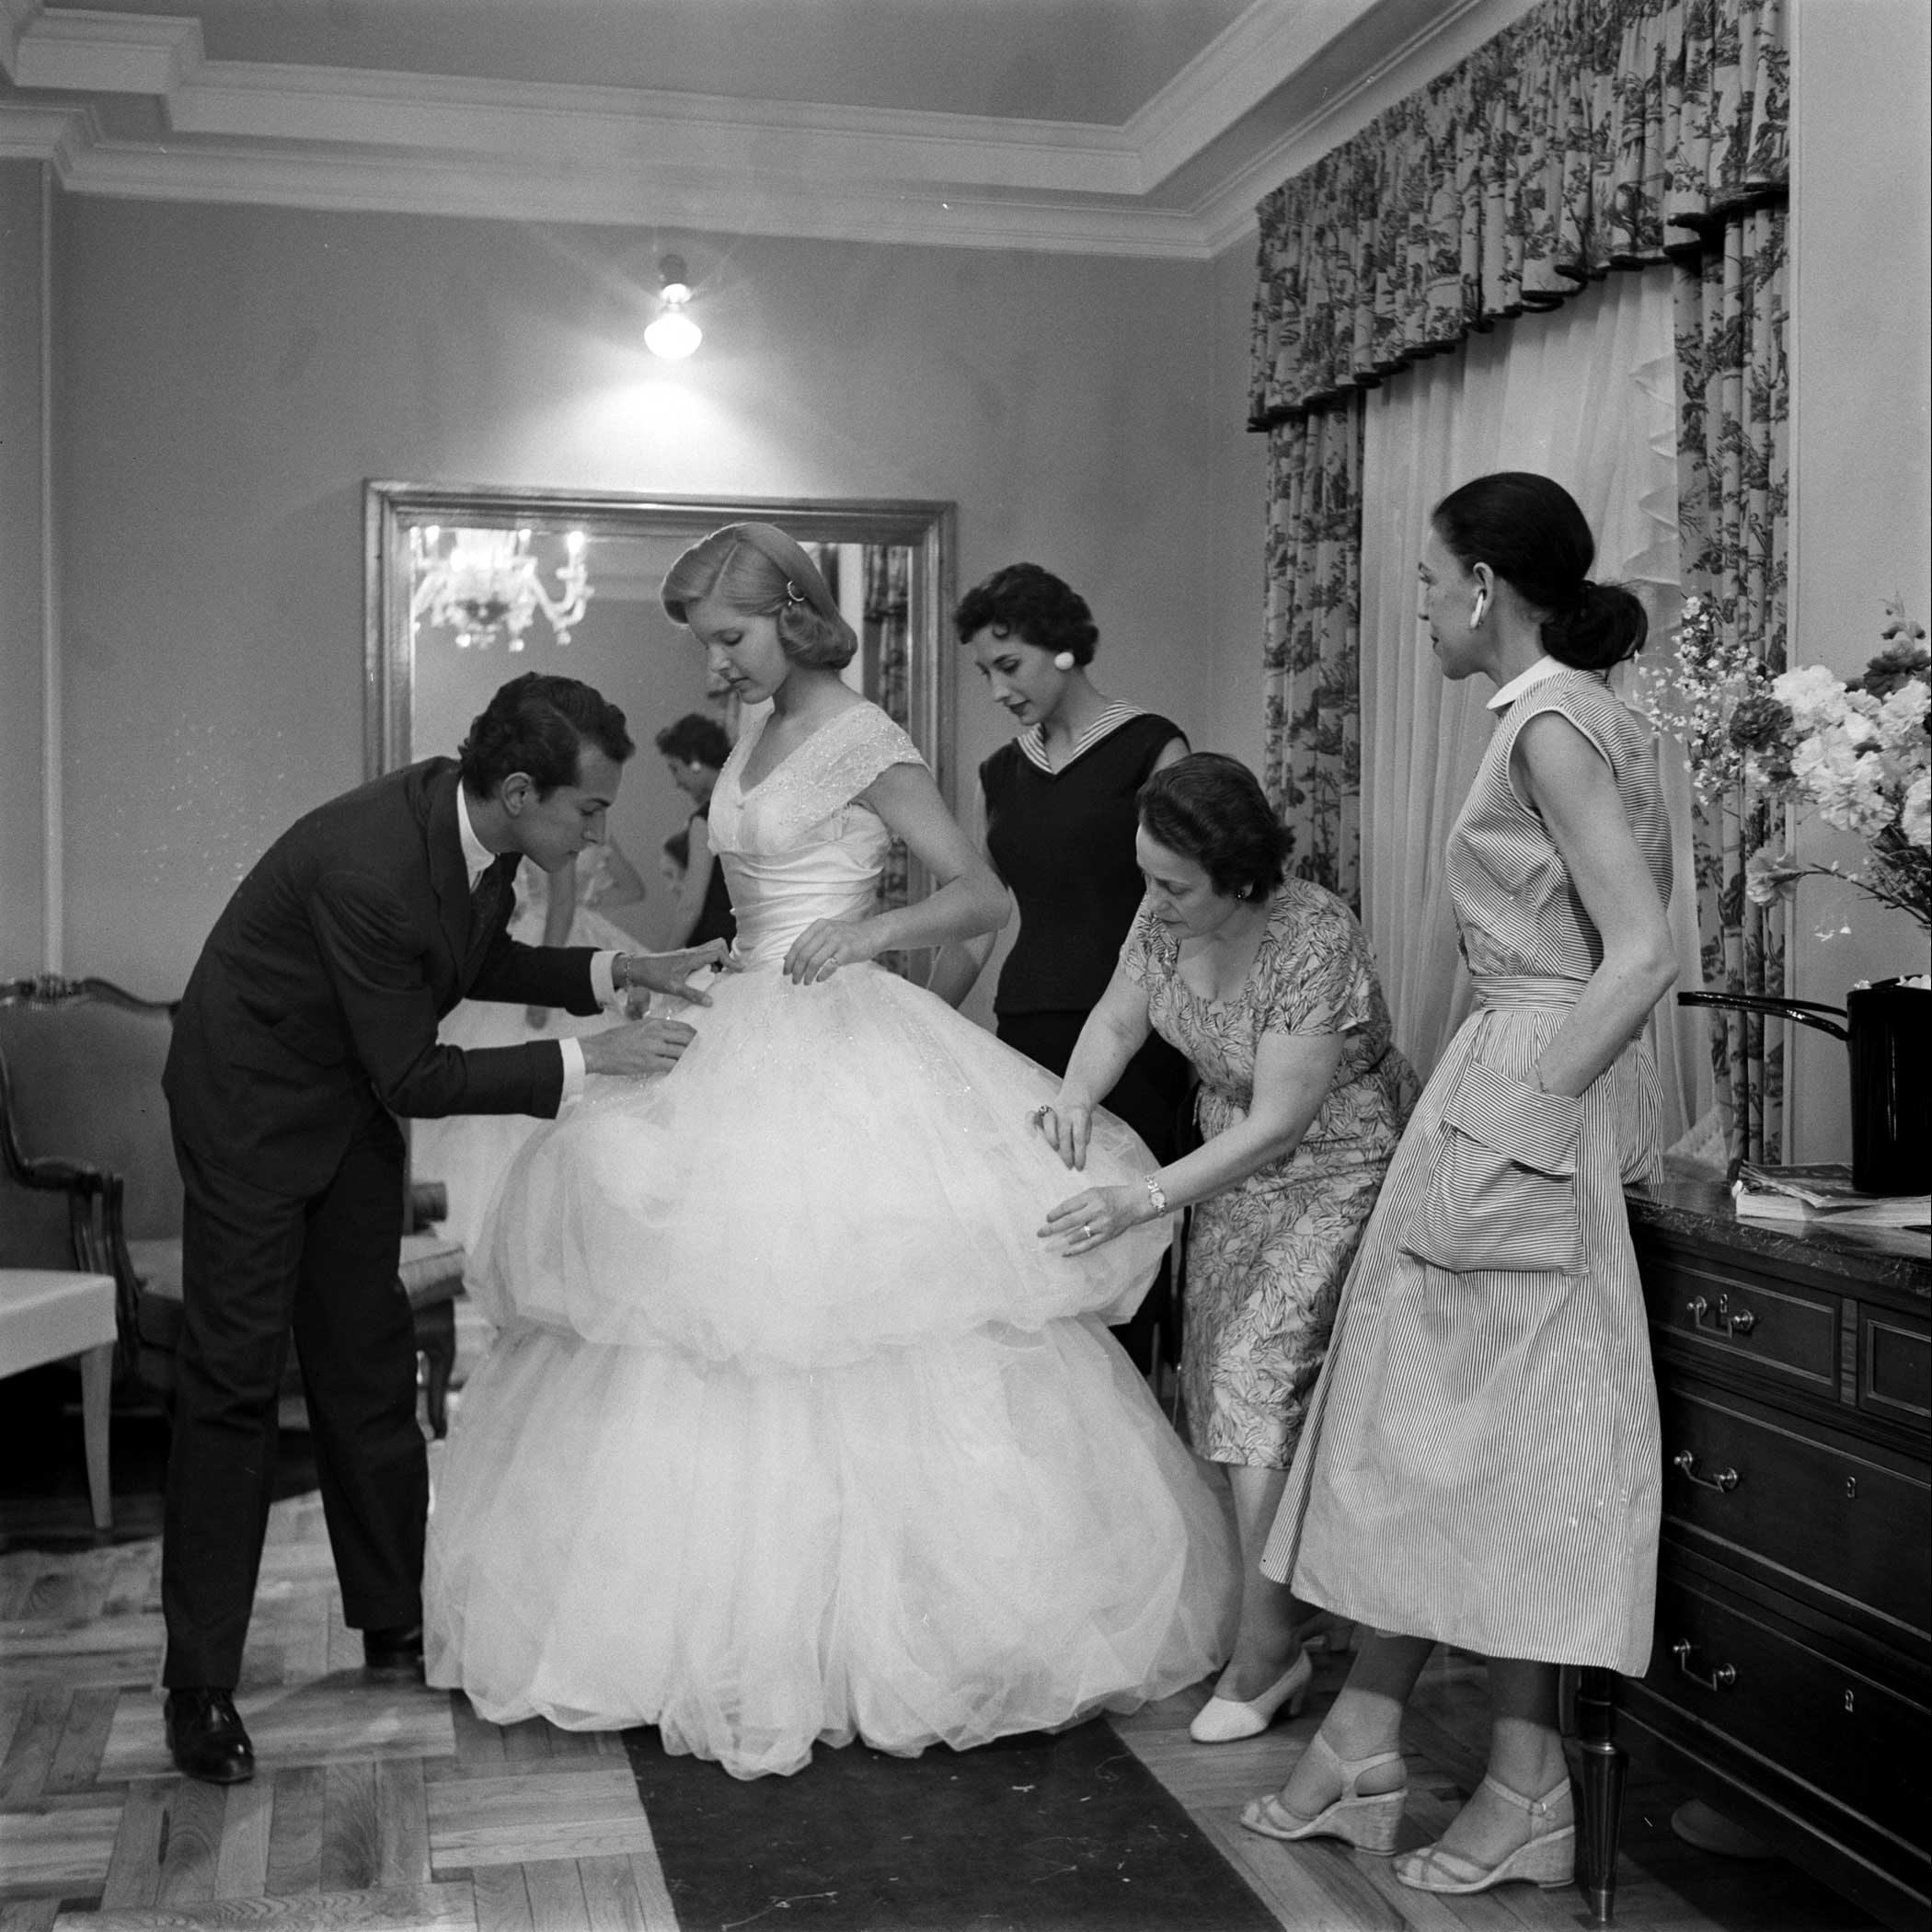 Oscar de la Renta fitting Beatrice Lodge, the daughter of actor-turned-politician John Lodge, in 1956.